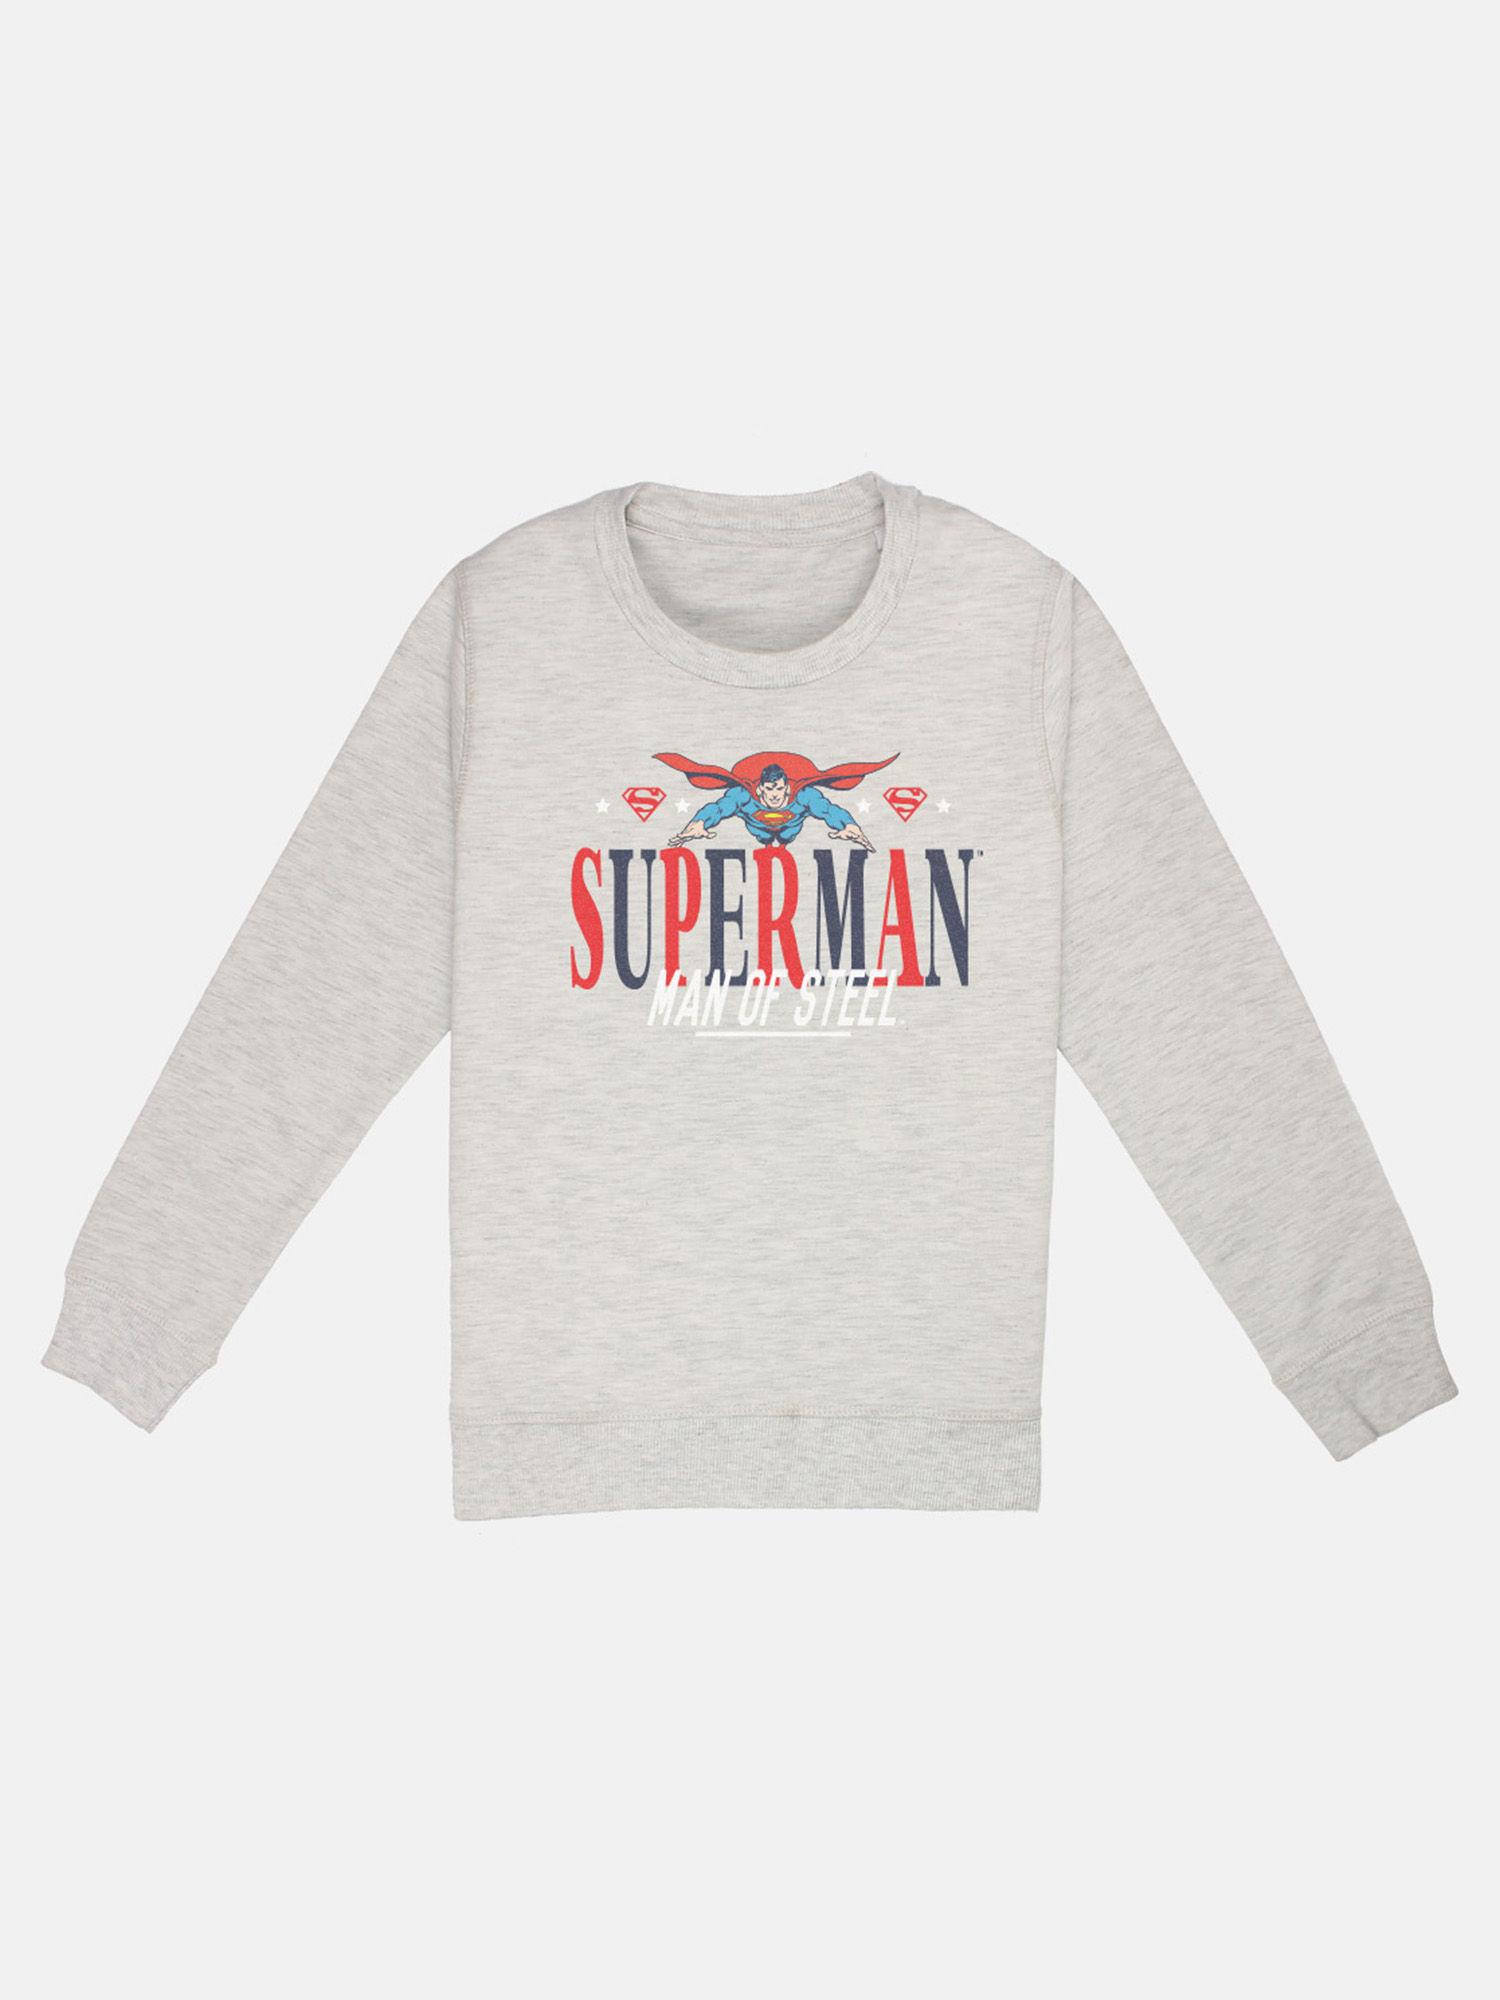 superman printed grey full sleeve sweater